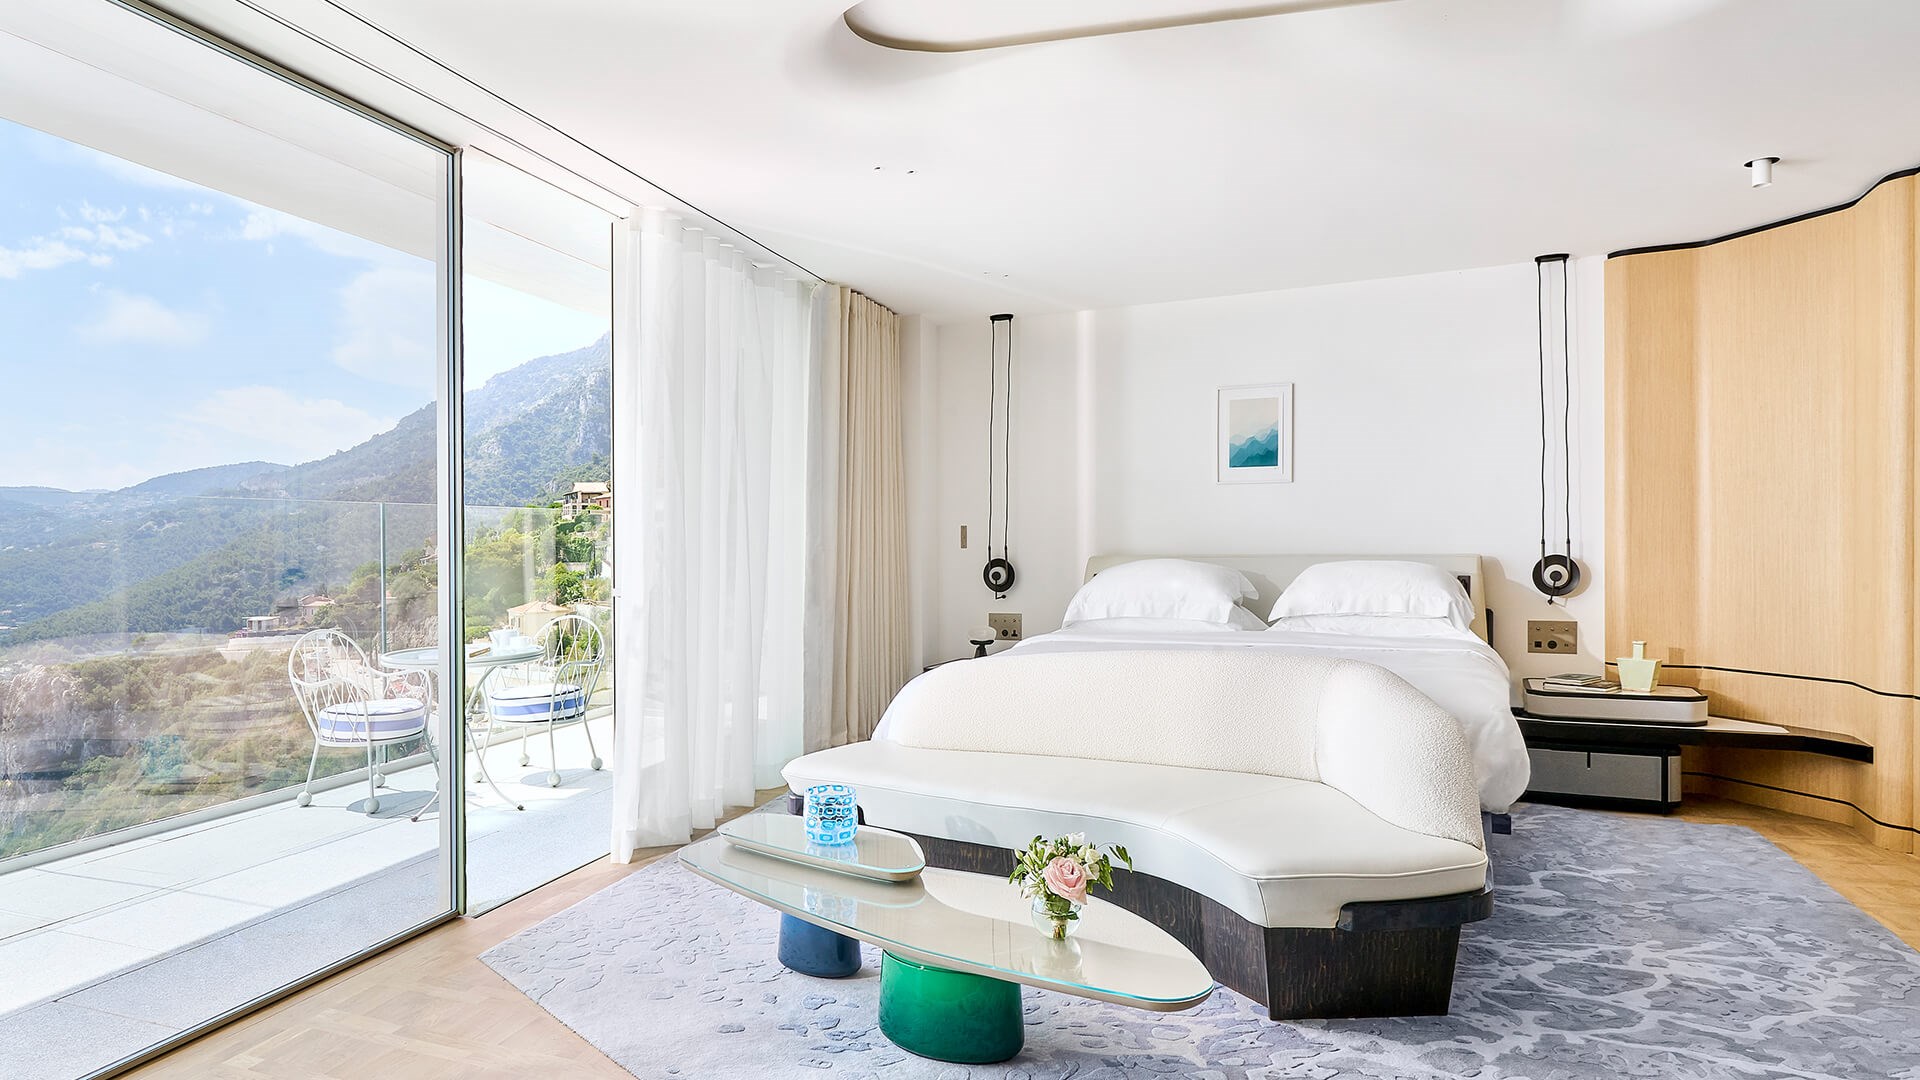 Maybourne Riviera Luxury Hotel, Roquebrune Cap Martin / Casol Villas France